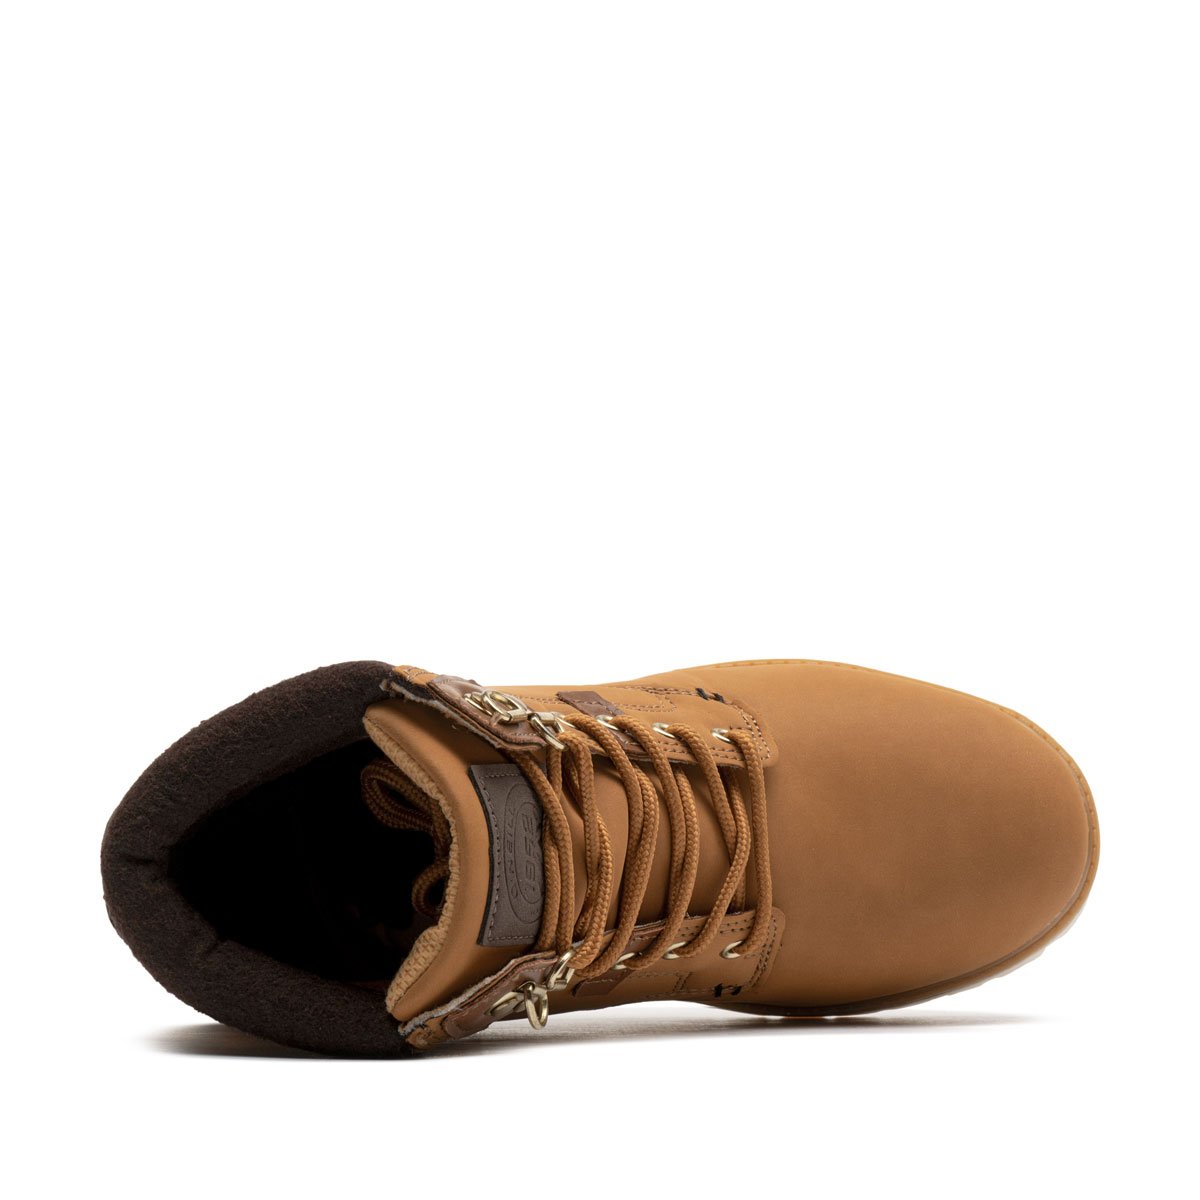 O Neill El Capitan High Дамски зимни обувки 90223009-35A